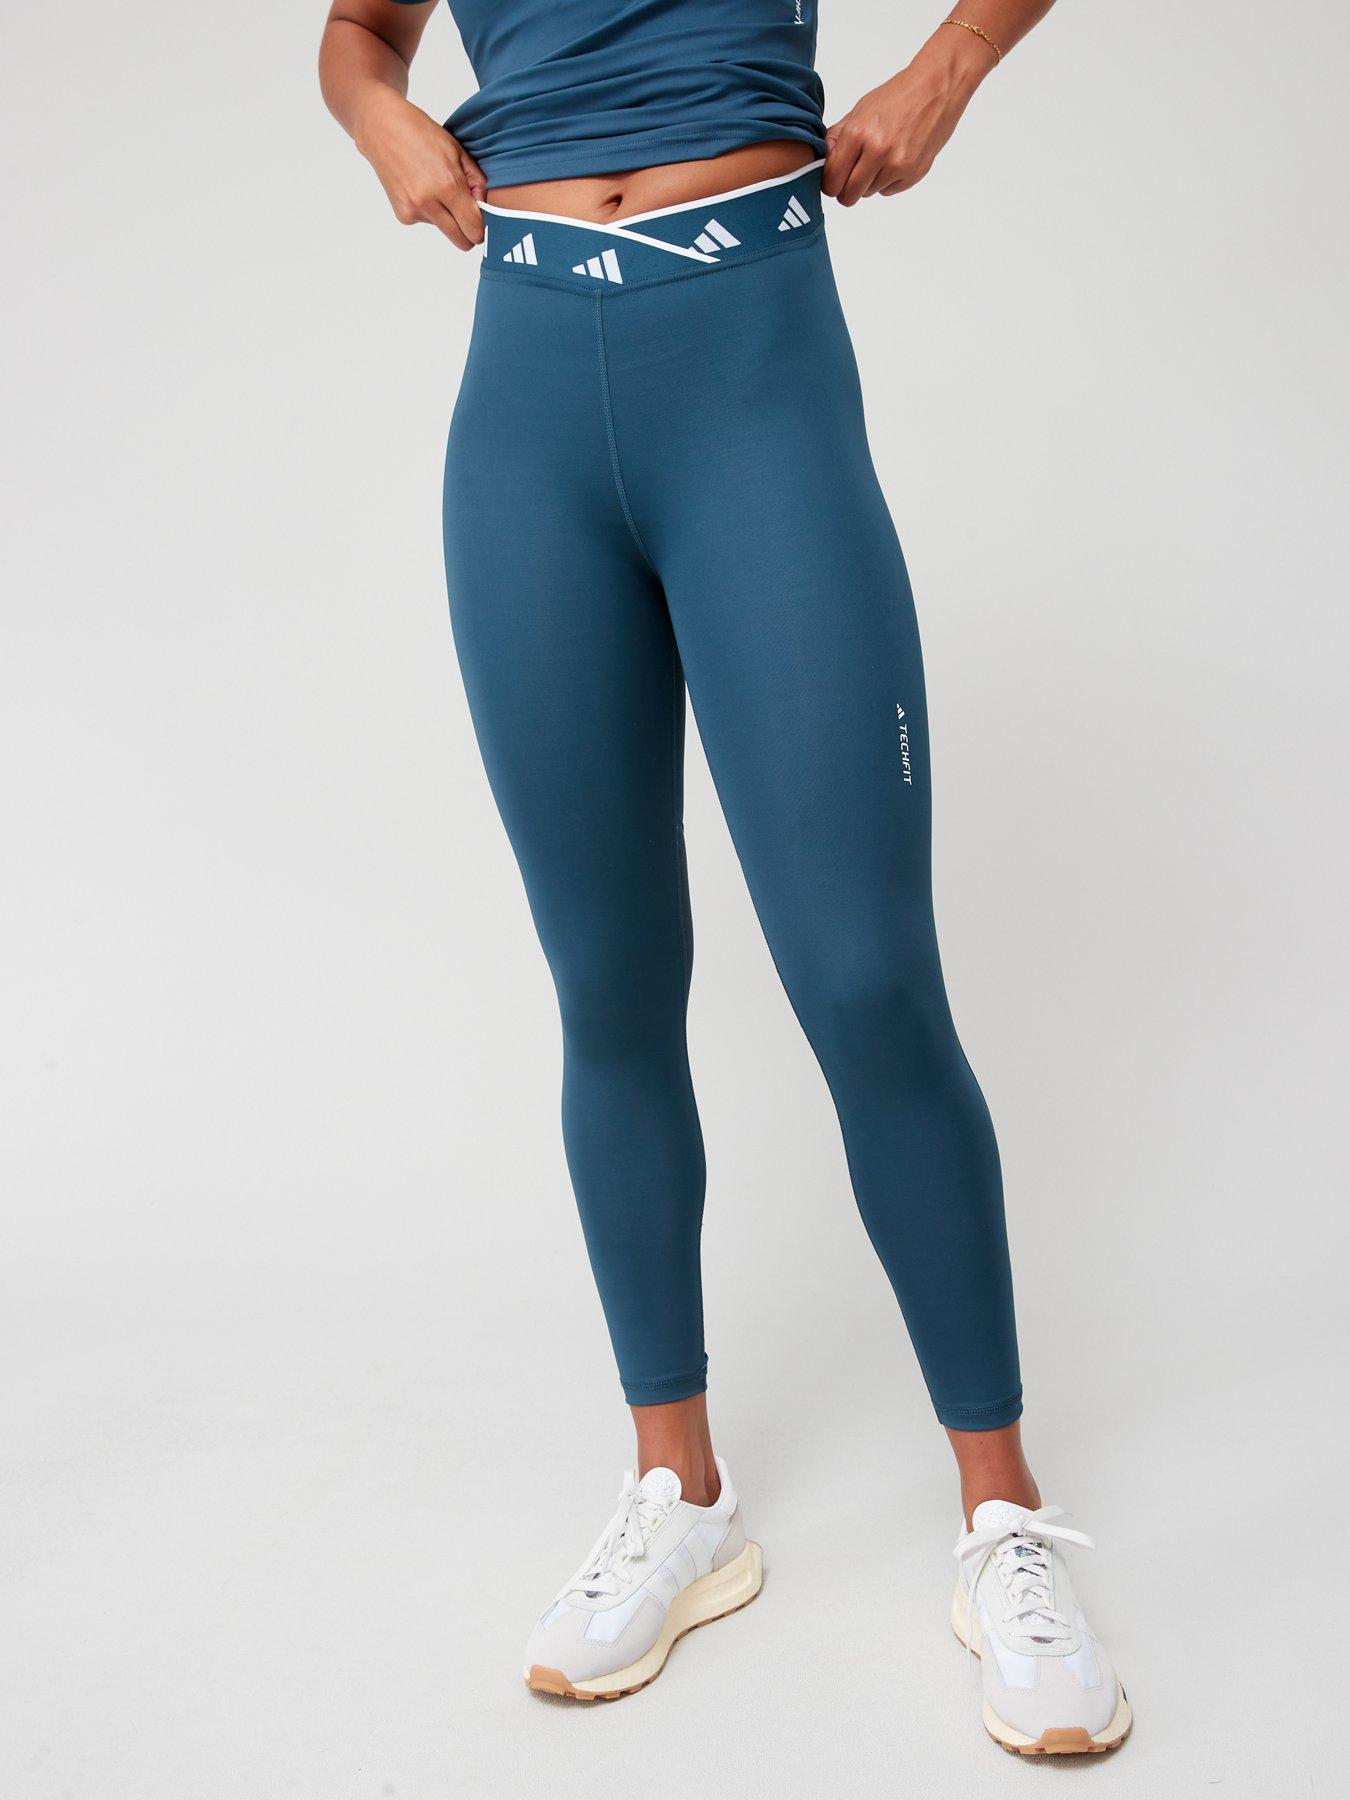 XS, Adidas, Tights & leggings, Womens sports clothing